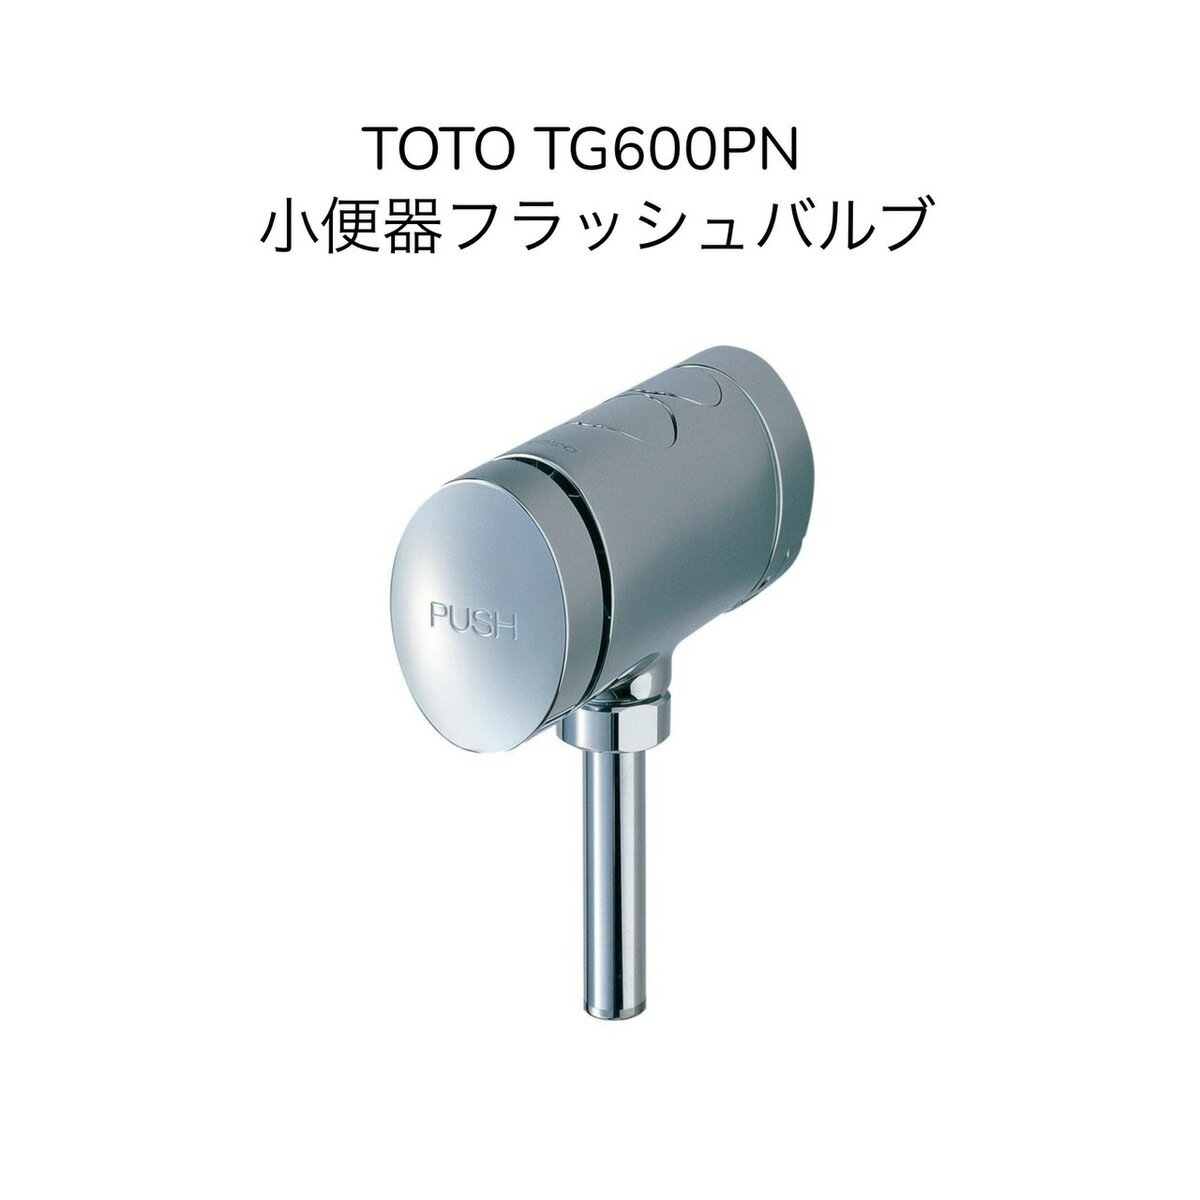 TOTO TG600PN 小便器用フラッシュバルブ 押しボタン 手動式 TG600PNXの現行品